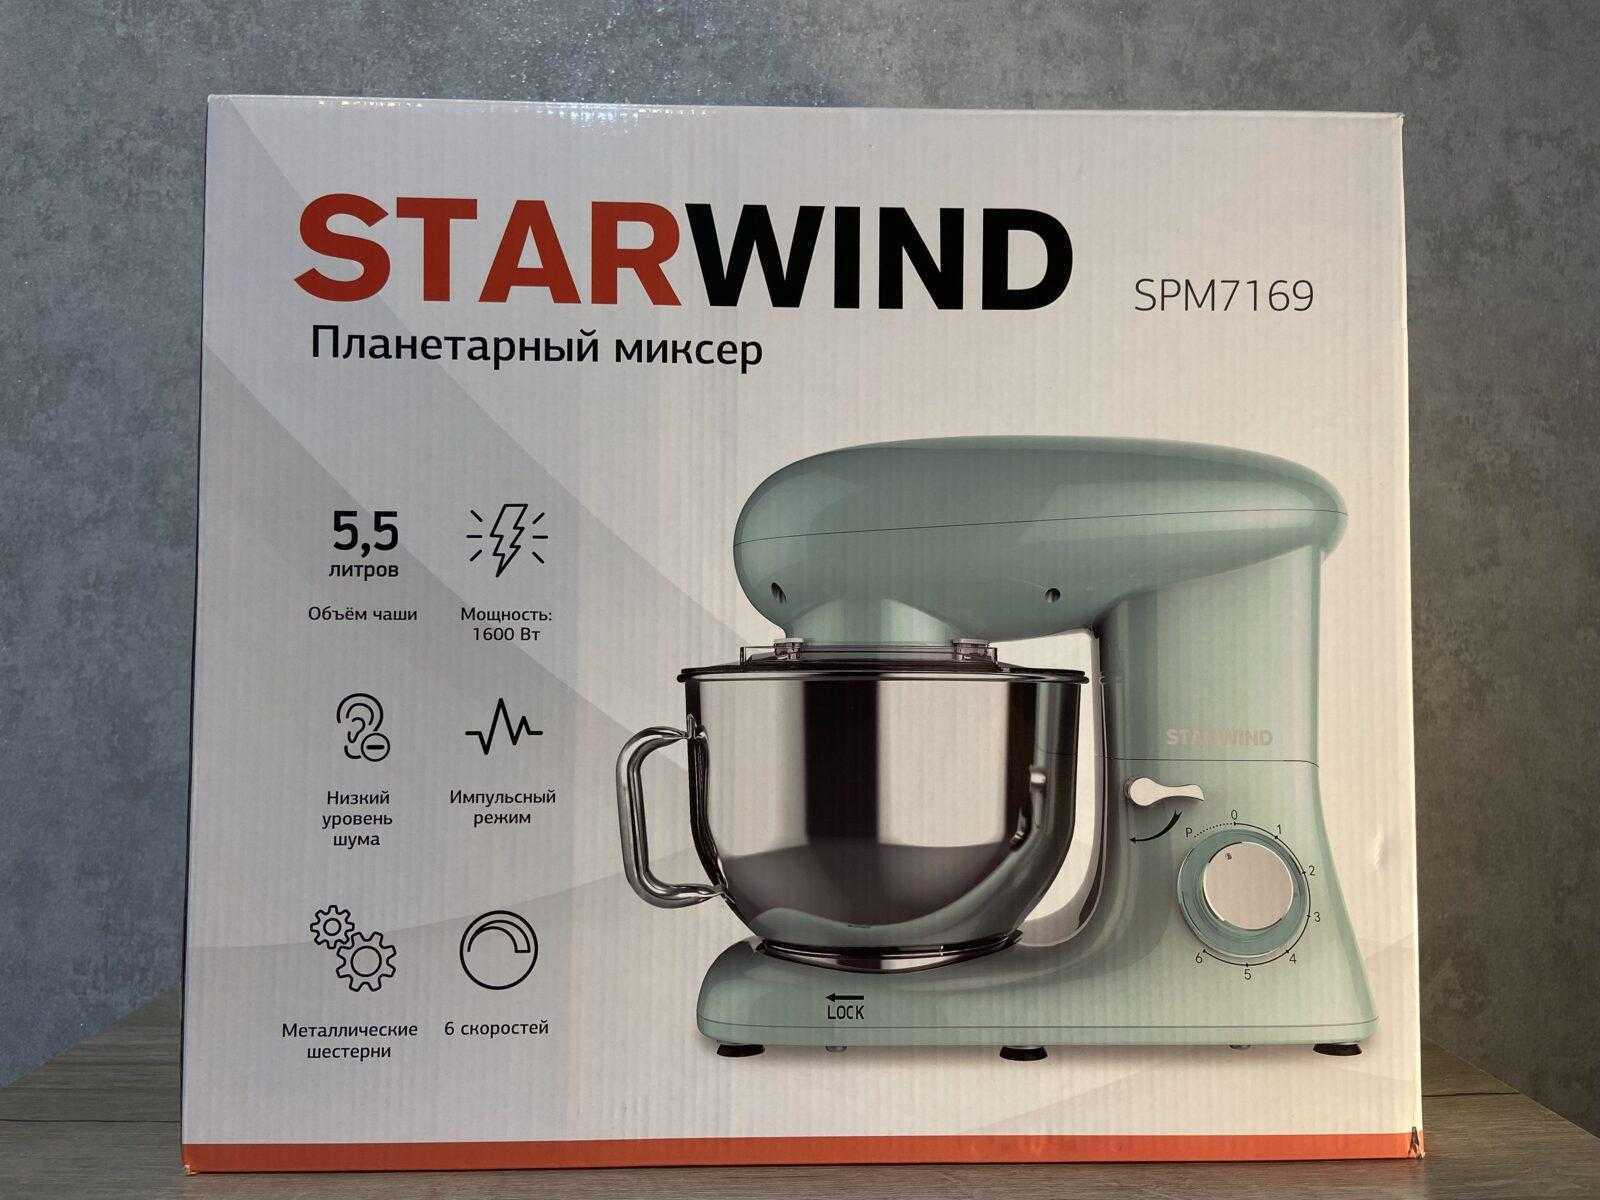 Starwind SPM7169